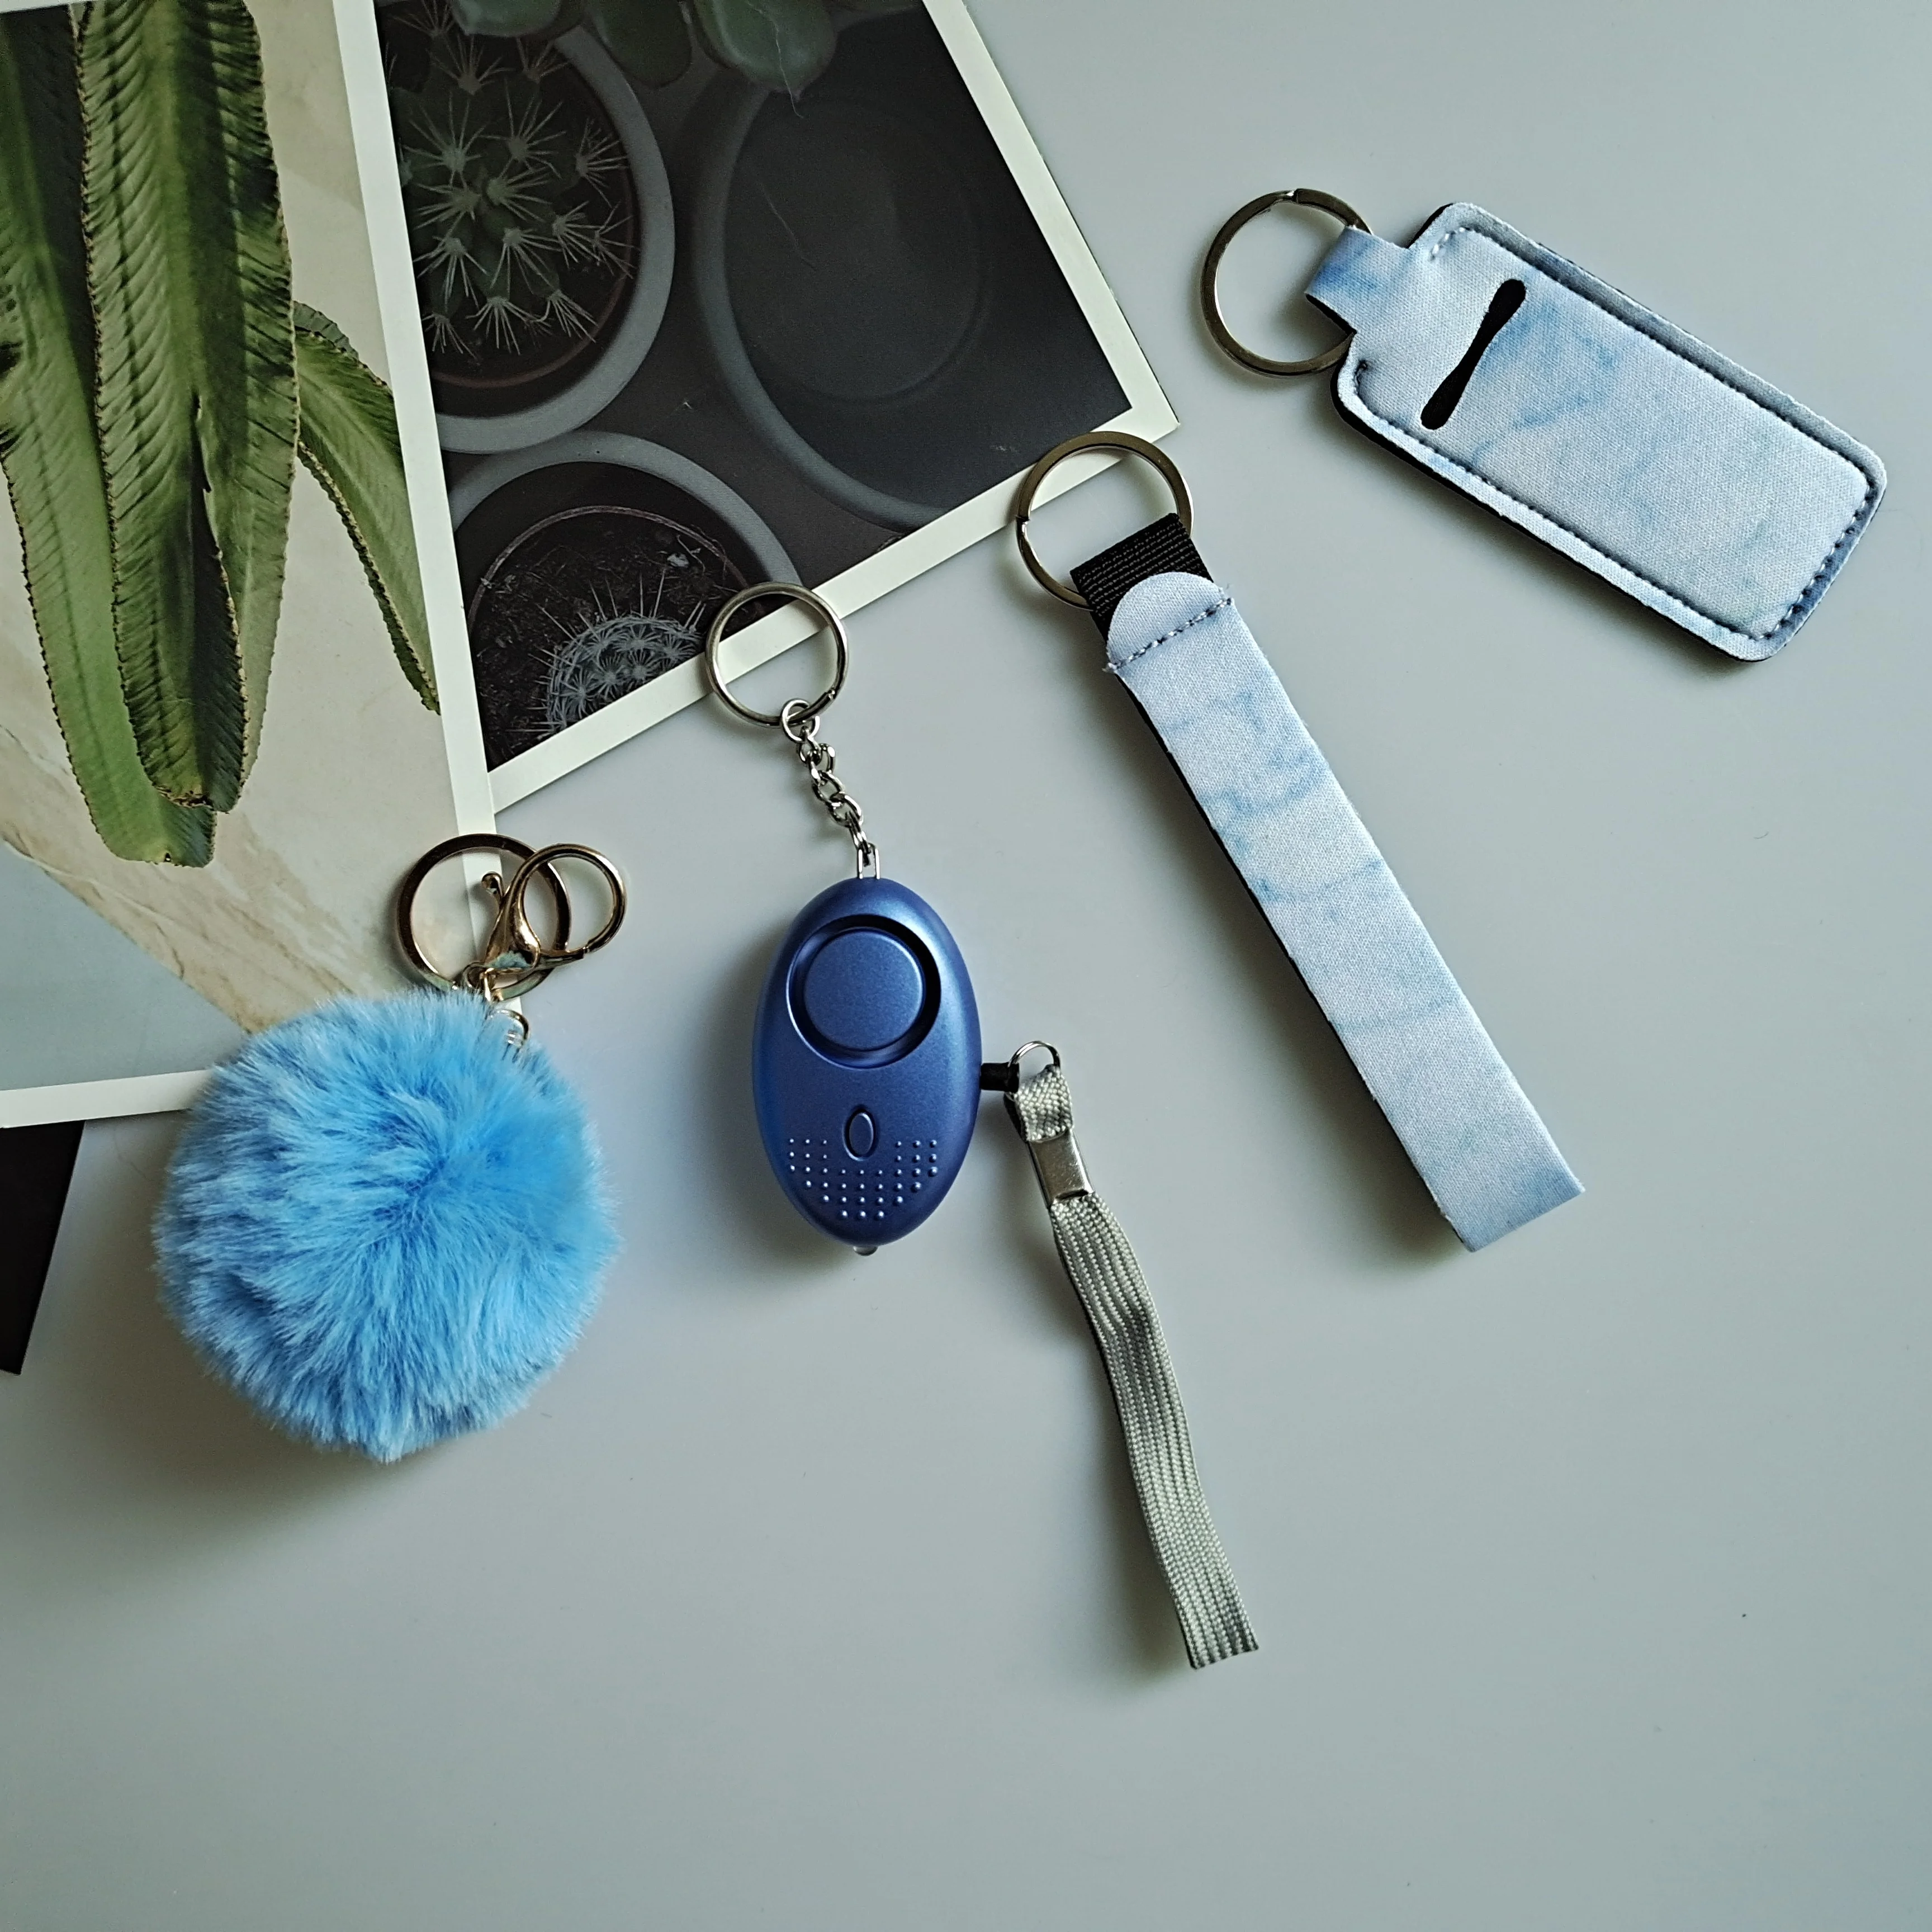 
New Fashion Pom Pom Lip Chapstick Holder Wristlet with LED Alarm Keychain Self Defence Products Set For Women 